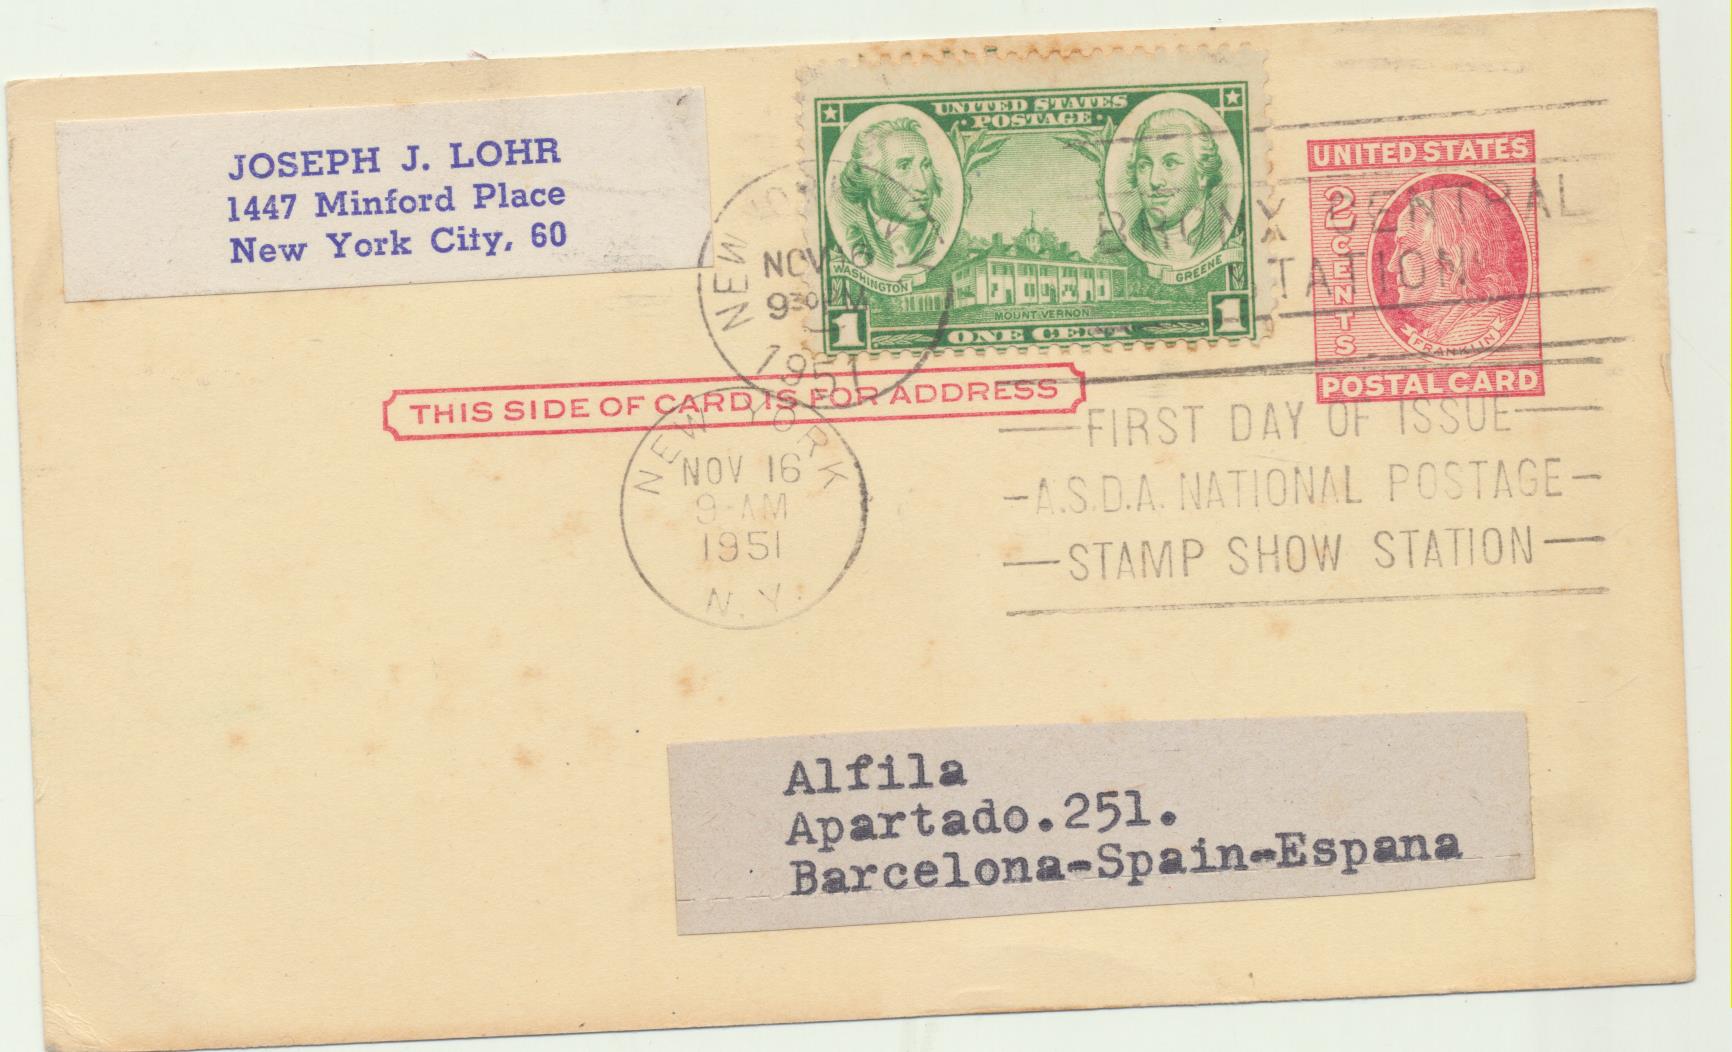 Estados unidos. Entero Postal (2 Cents) Primer Día. 19-Nove-1951. De Nueva York a Barcelona